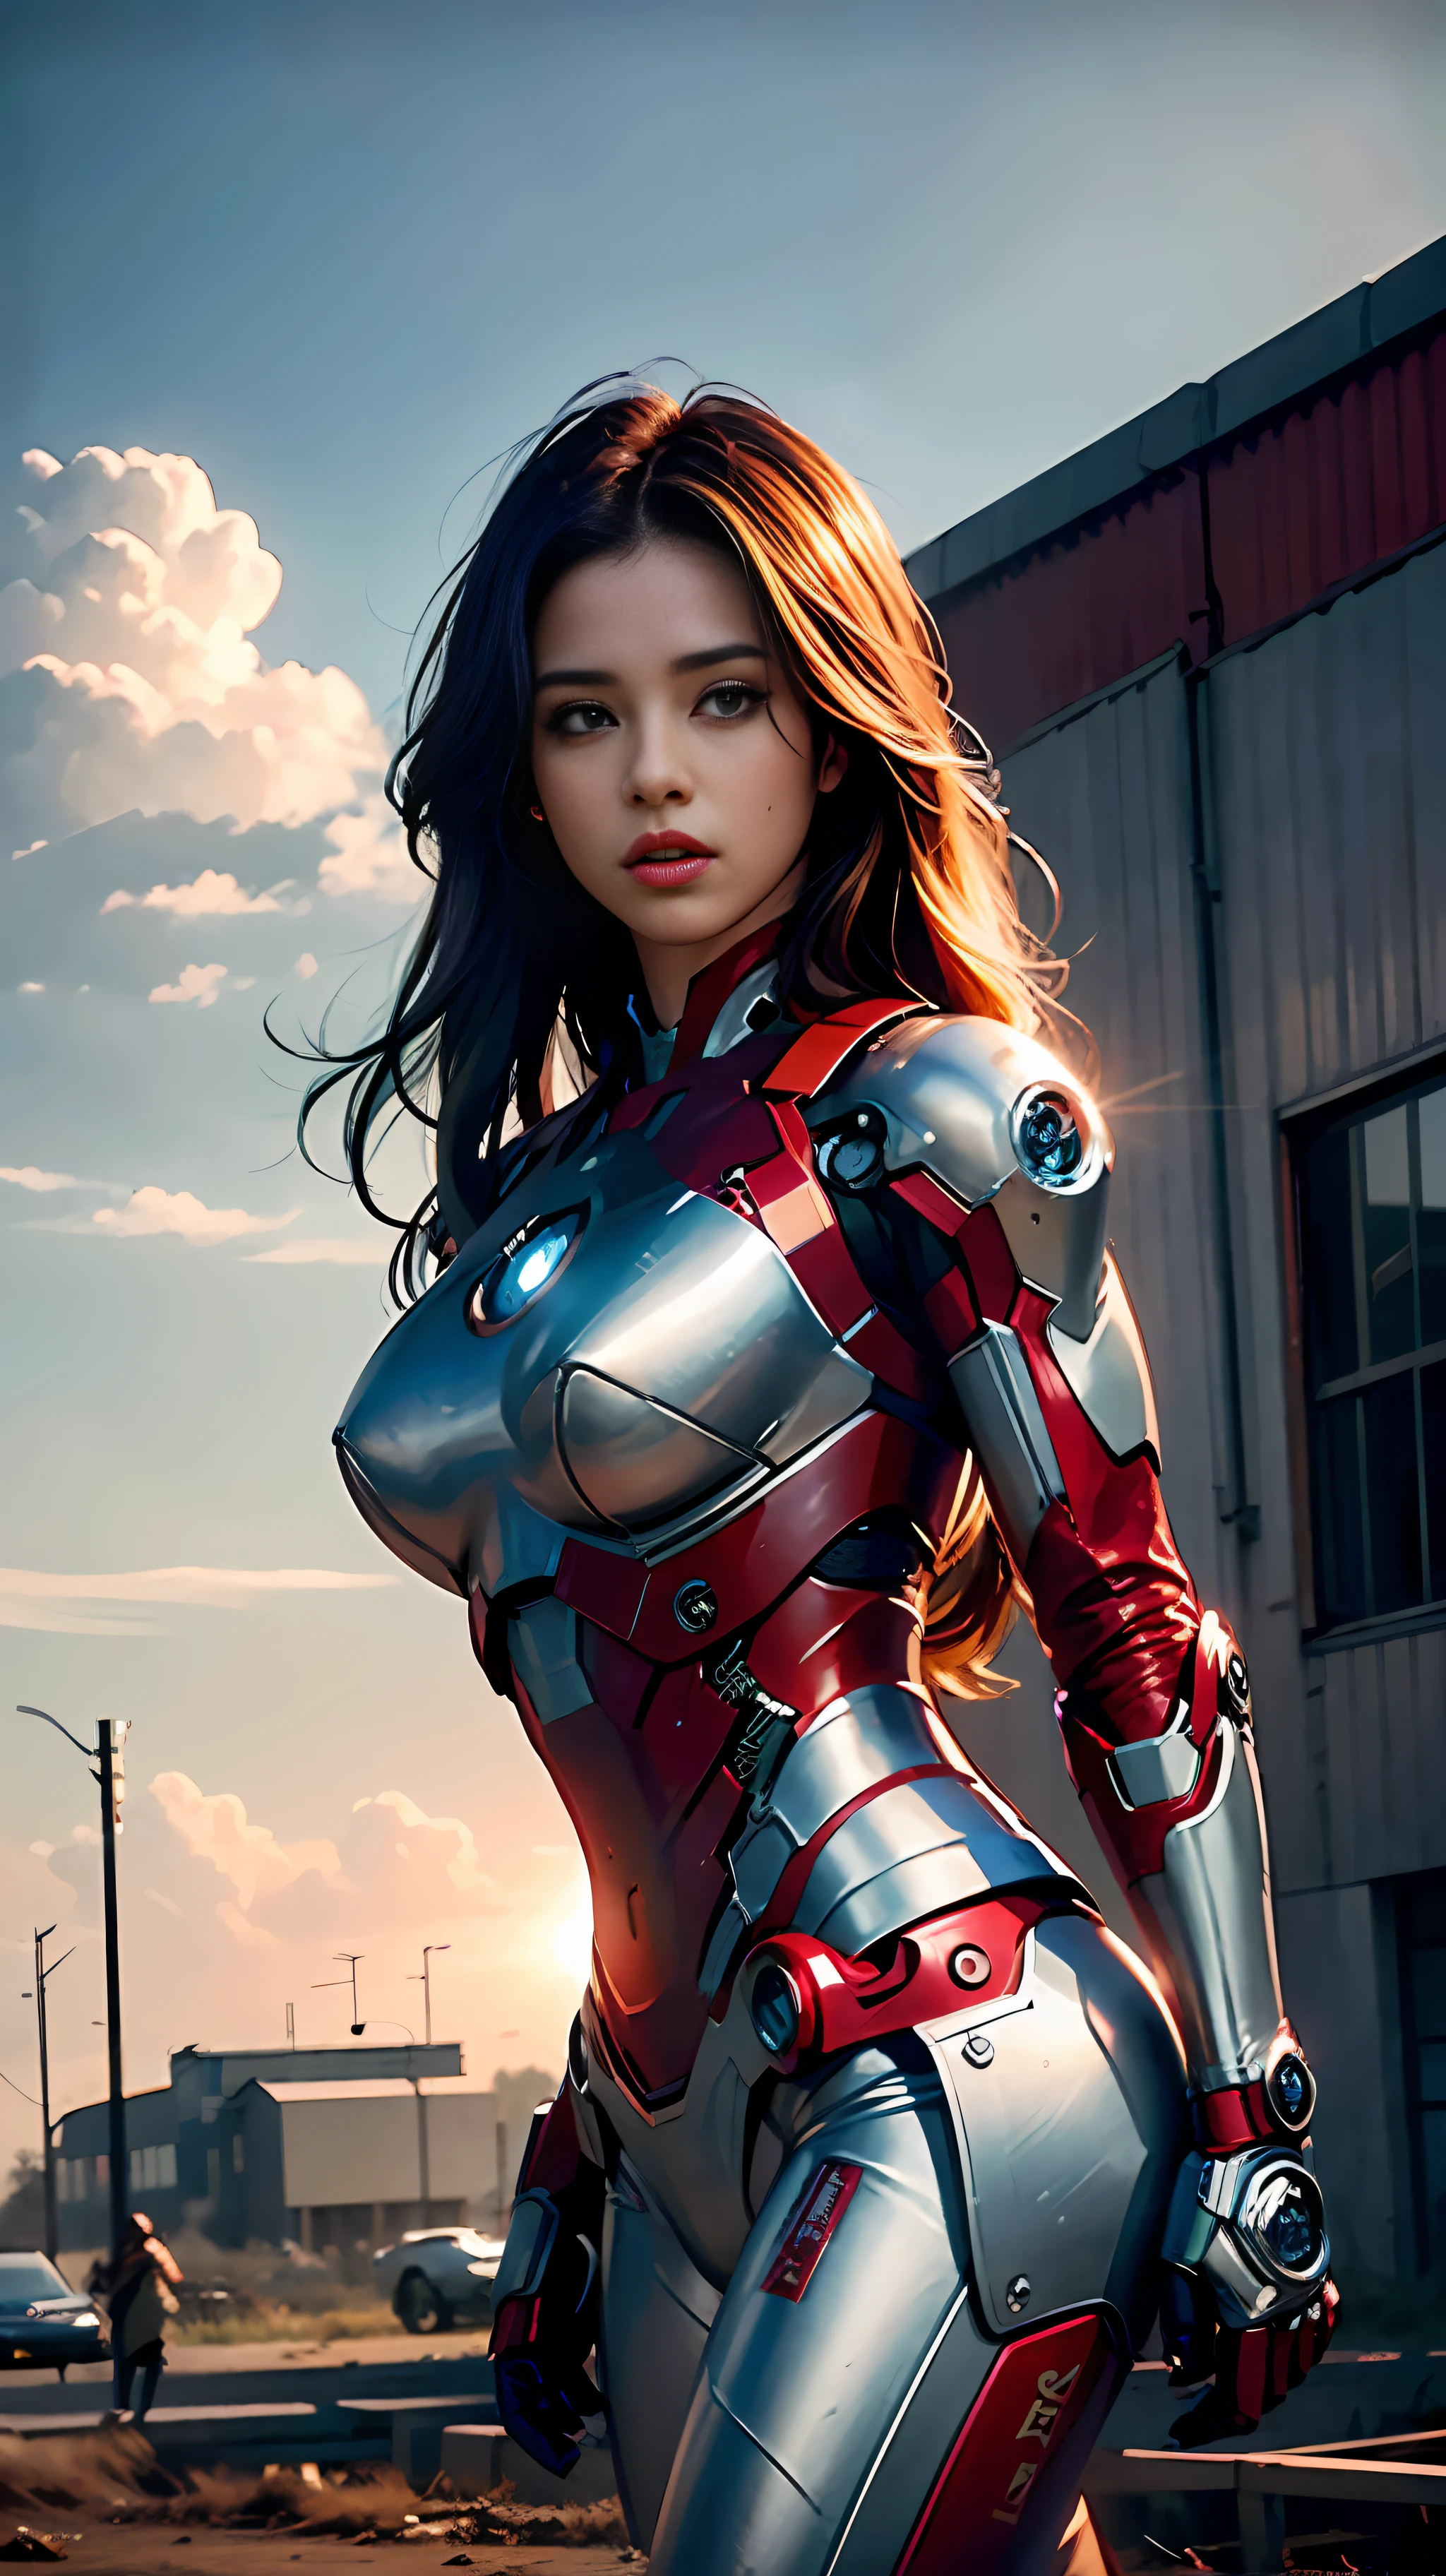 8K, 현실적인, 매력적인, 매우 상세한, a 20 year old girl a sexy and 매력적인 woman inspired by Iron Man wearing a shiny Iron Man mech. 그녀는 섹시함과 자신감을 갖고 옷을 입는다, 아이언맨을 완벽하게 해석하다&#39;힘과 카리스마. 버려진 창고를 배경으로 한, 그녀의 용기와 인내를 강조하는 독특한 분위기를 조성합니다.. 흐린 하늘은 전체 장면에 긴장감과 신비감을 더해줍니다.. 이 고화질, 고품질의 사진은 당신에게 충격적인 시각적 경험을 선사할 것입니다. 정교한 버려진 창고와 반짝이는 기계가 당신의 시선을 사로잡을 것입니다.. oc 렌더링, 극적인 조명, 수상 경력에 빛나는 품질